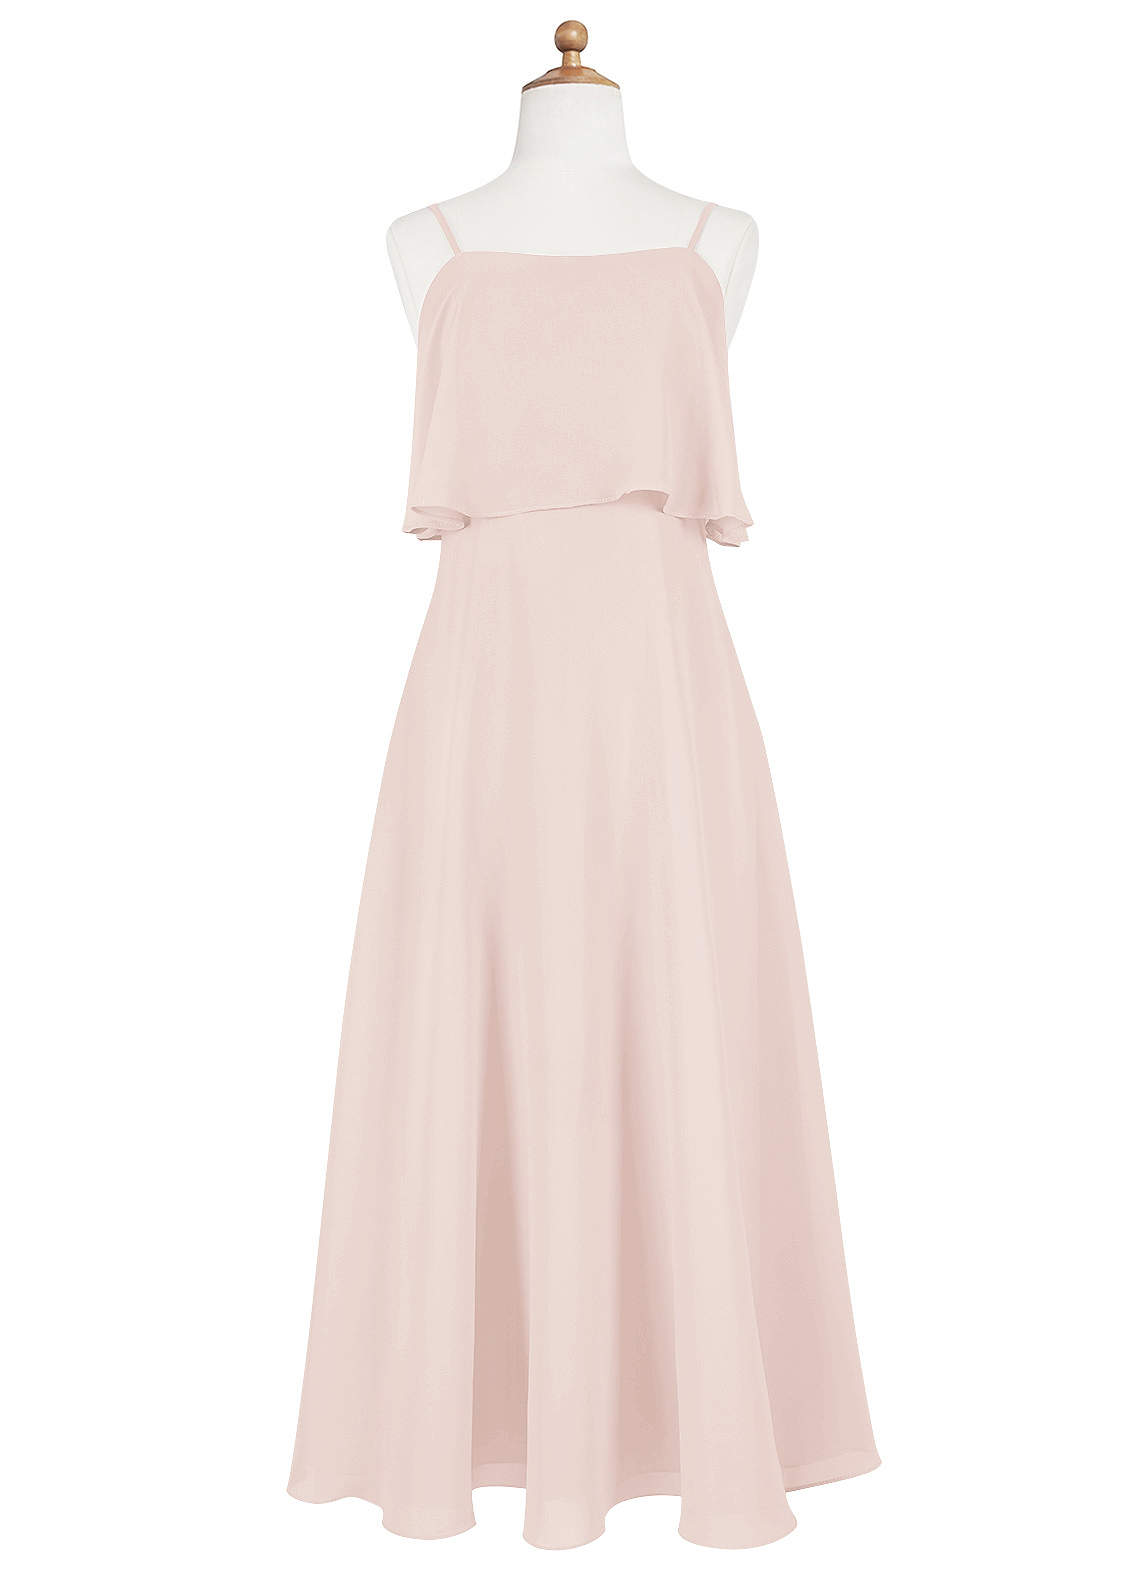 Azazie Izabella A-Line Ruched Chiffon Floor-Length Junior Bridesmaid Dress image1